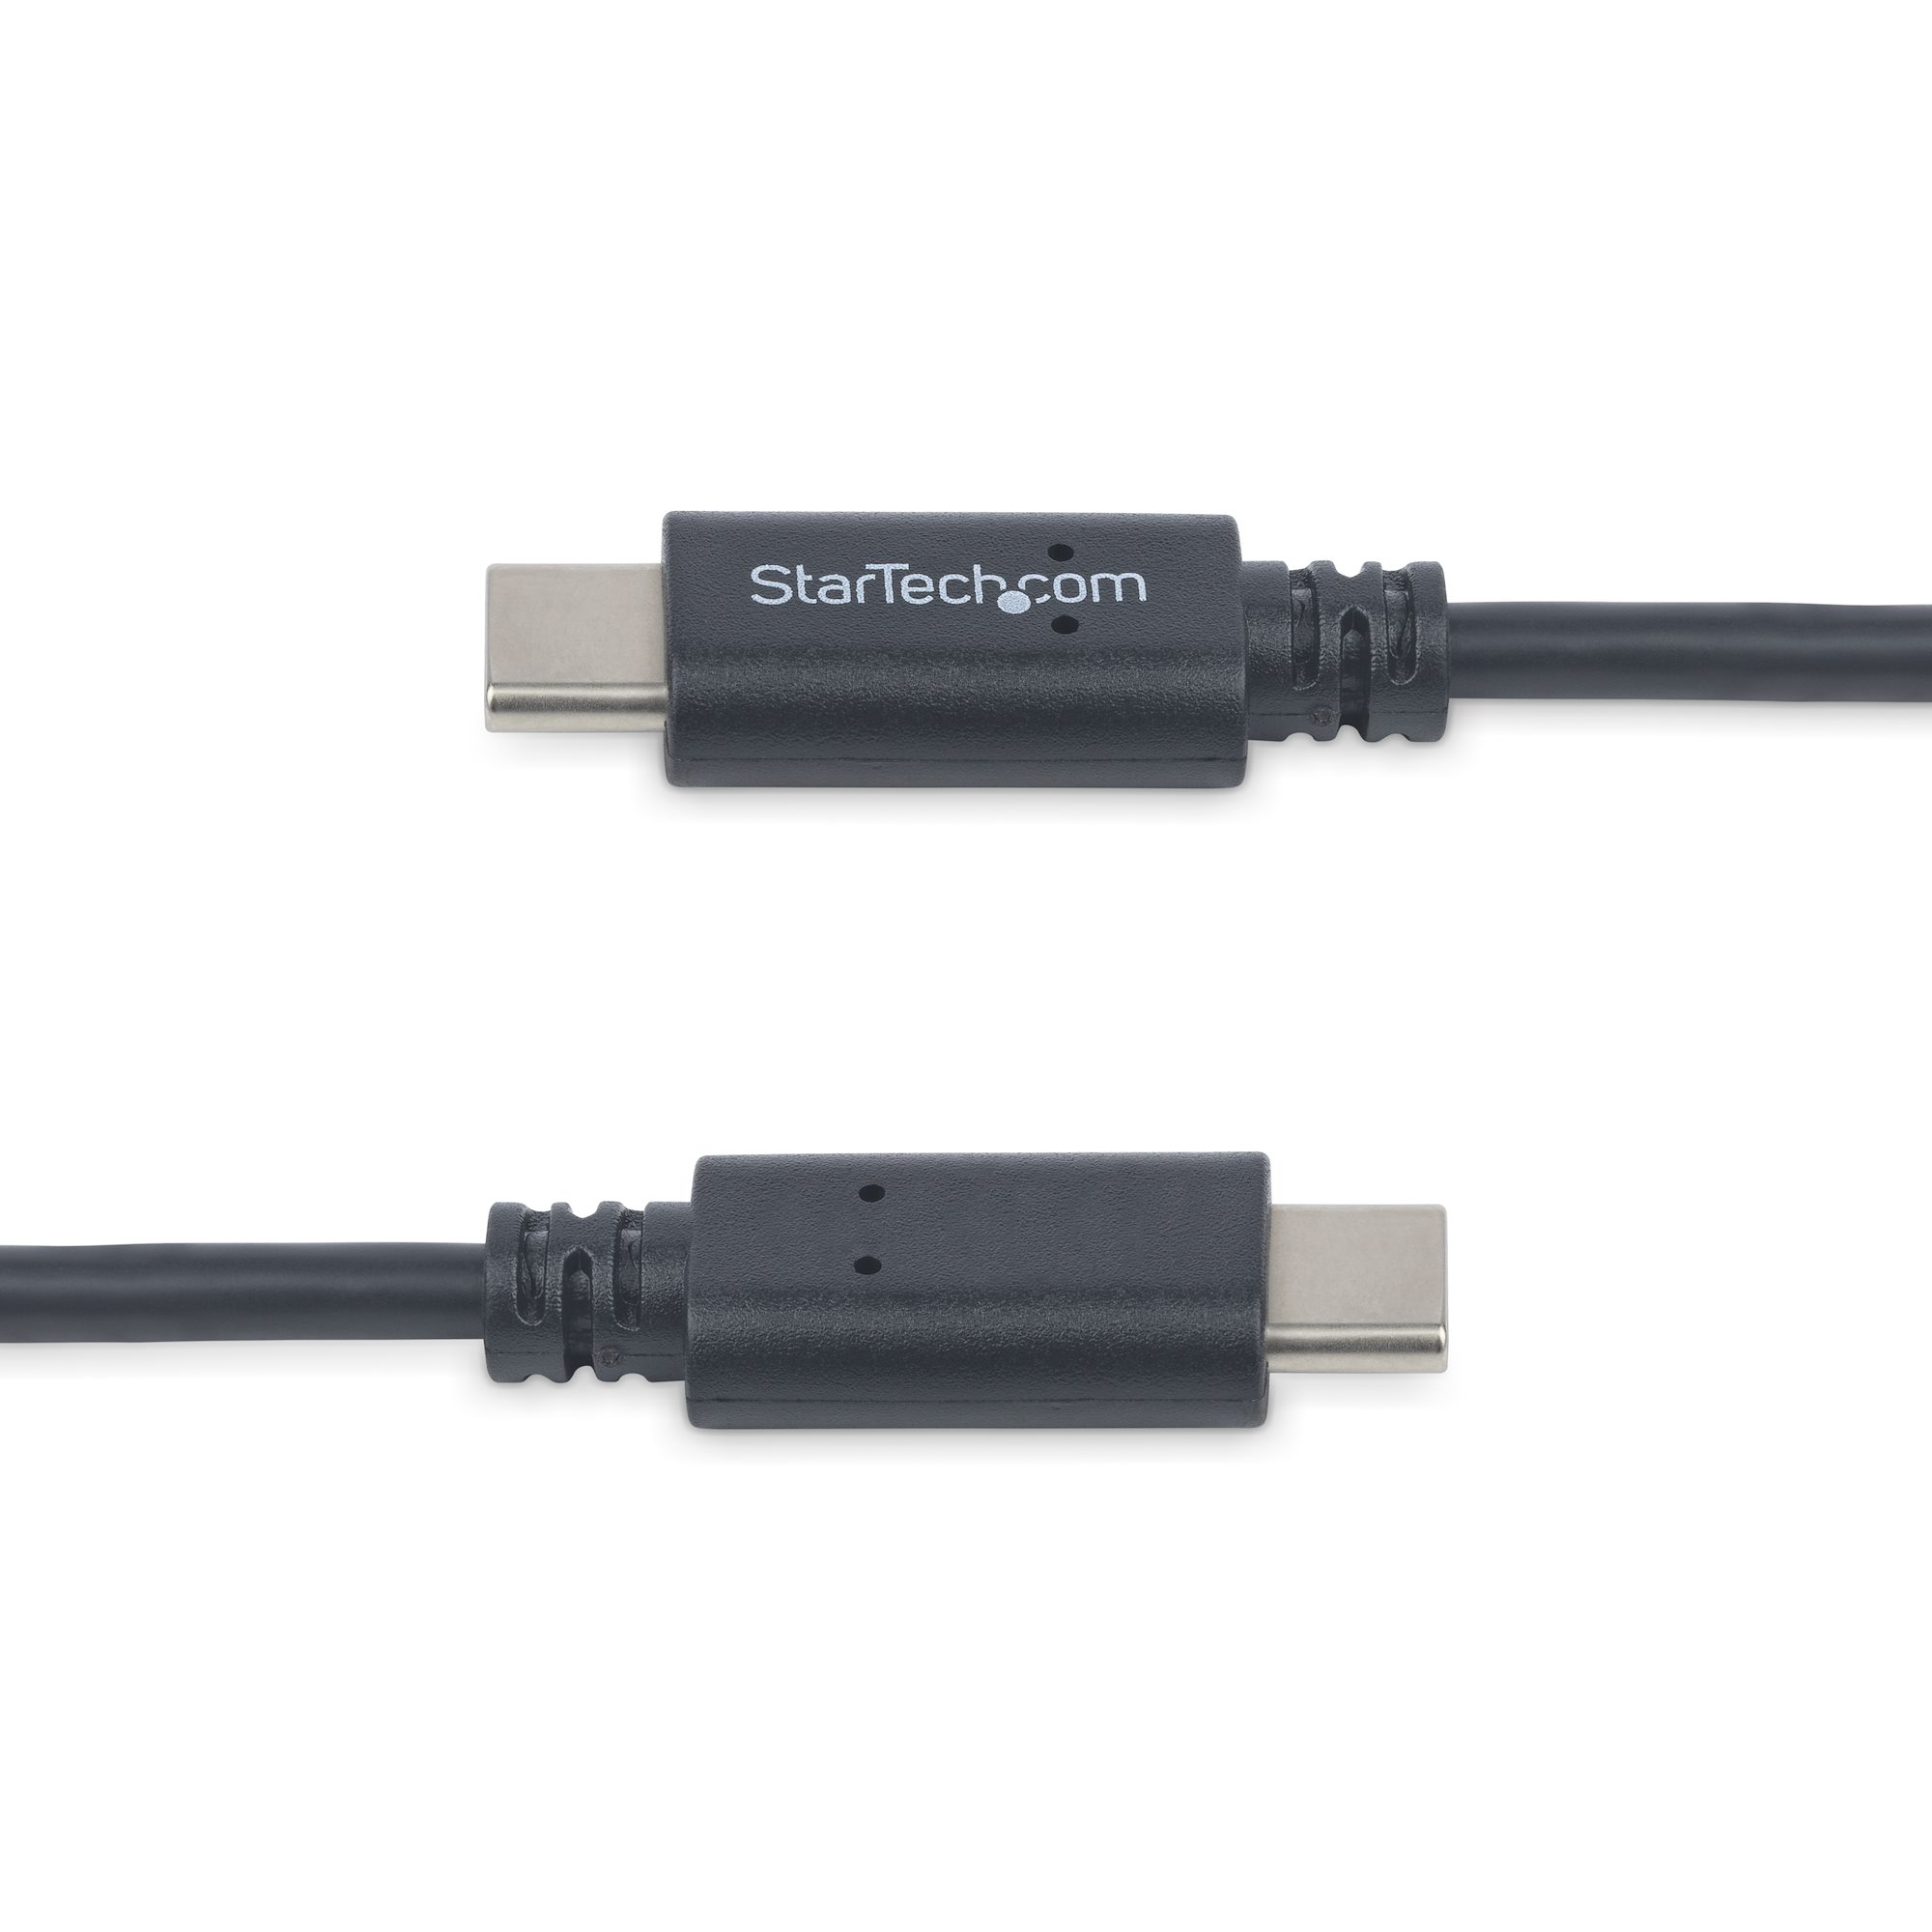 StarTech.com USB C to Micro USB Cable 2m 6ft - USB-C to Micro USB Charge  Cable - USB 2.0 Type C to Micro B - Thunderbolt 3 Compatible (USB2CUB2M)